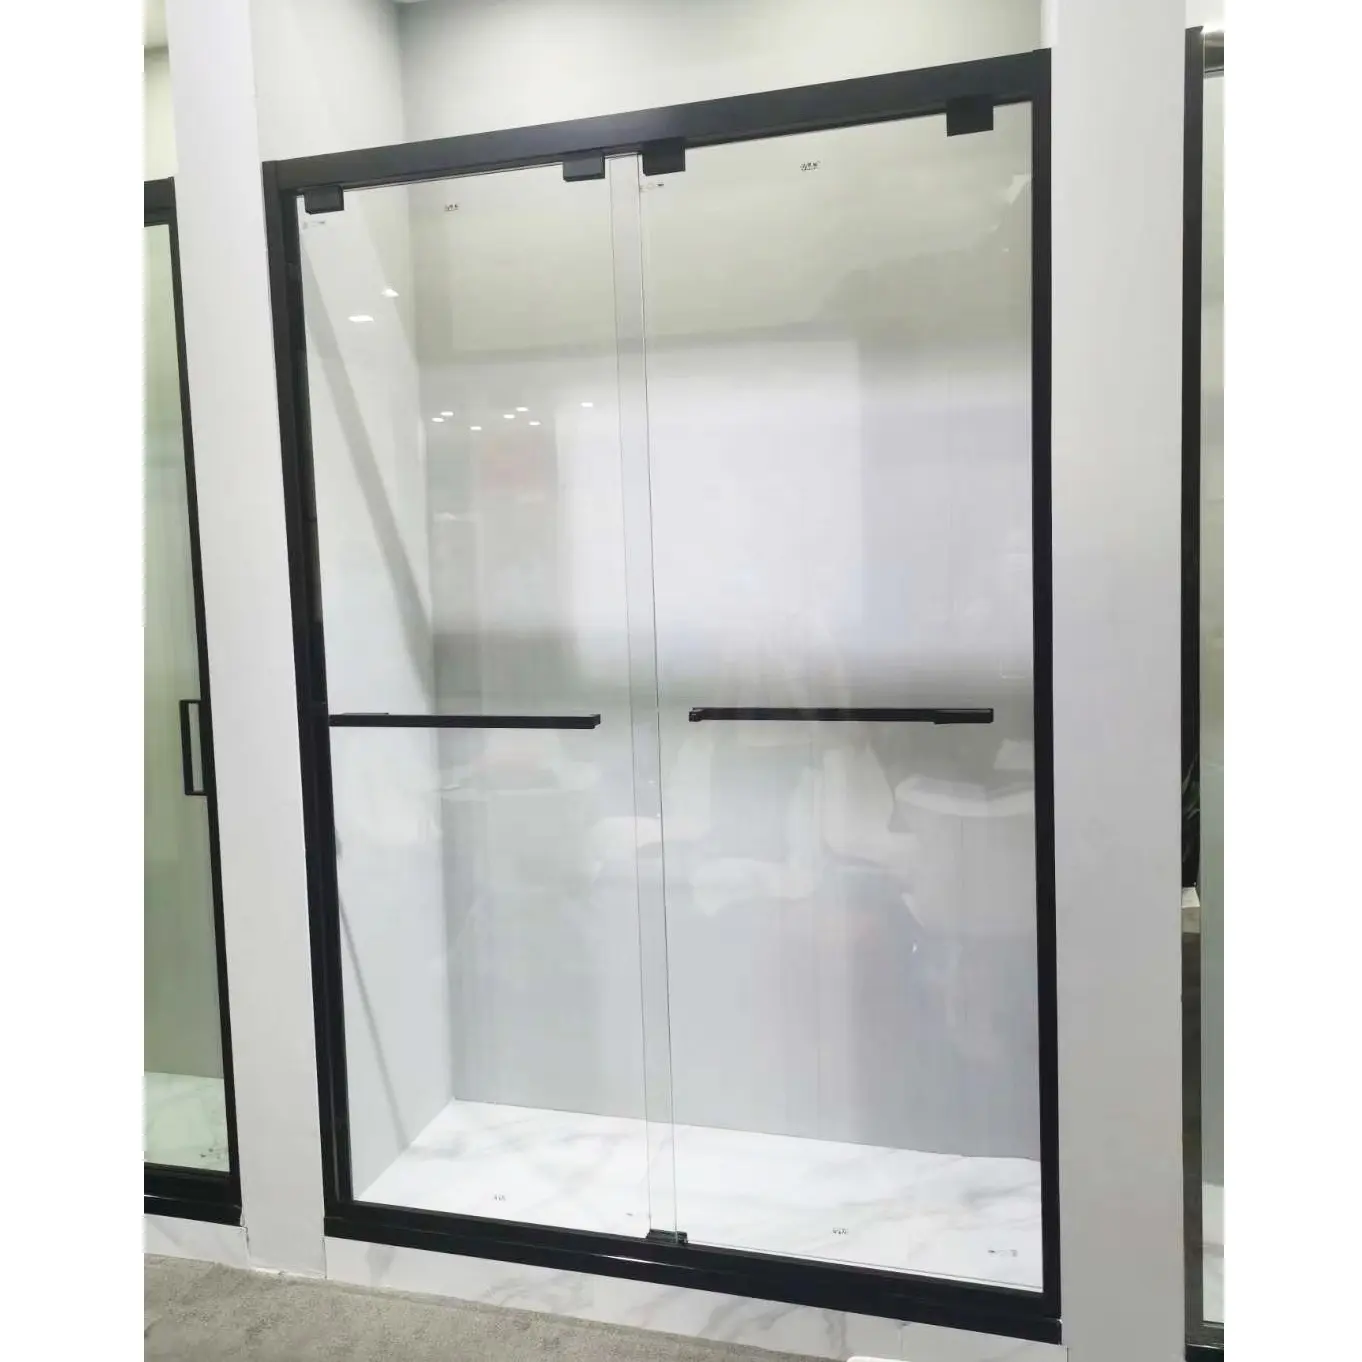 SUS304 stainless steel black shower sliding glass door with doorsill water proof glass screen for bathroom